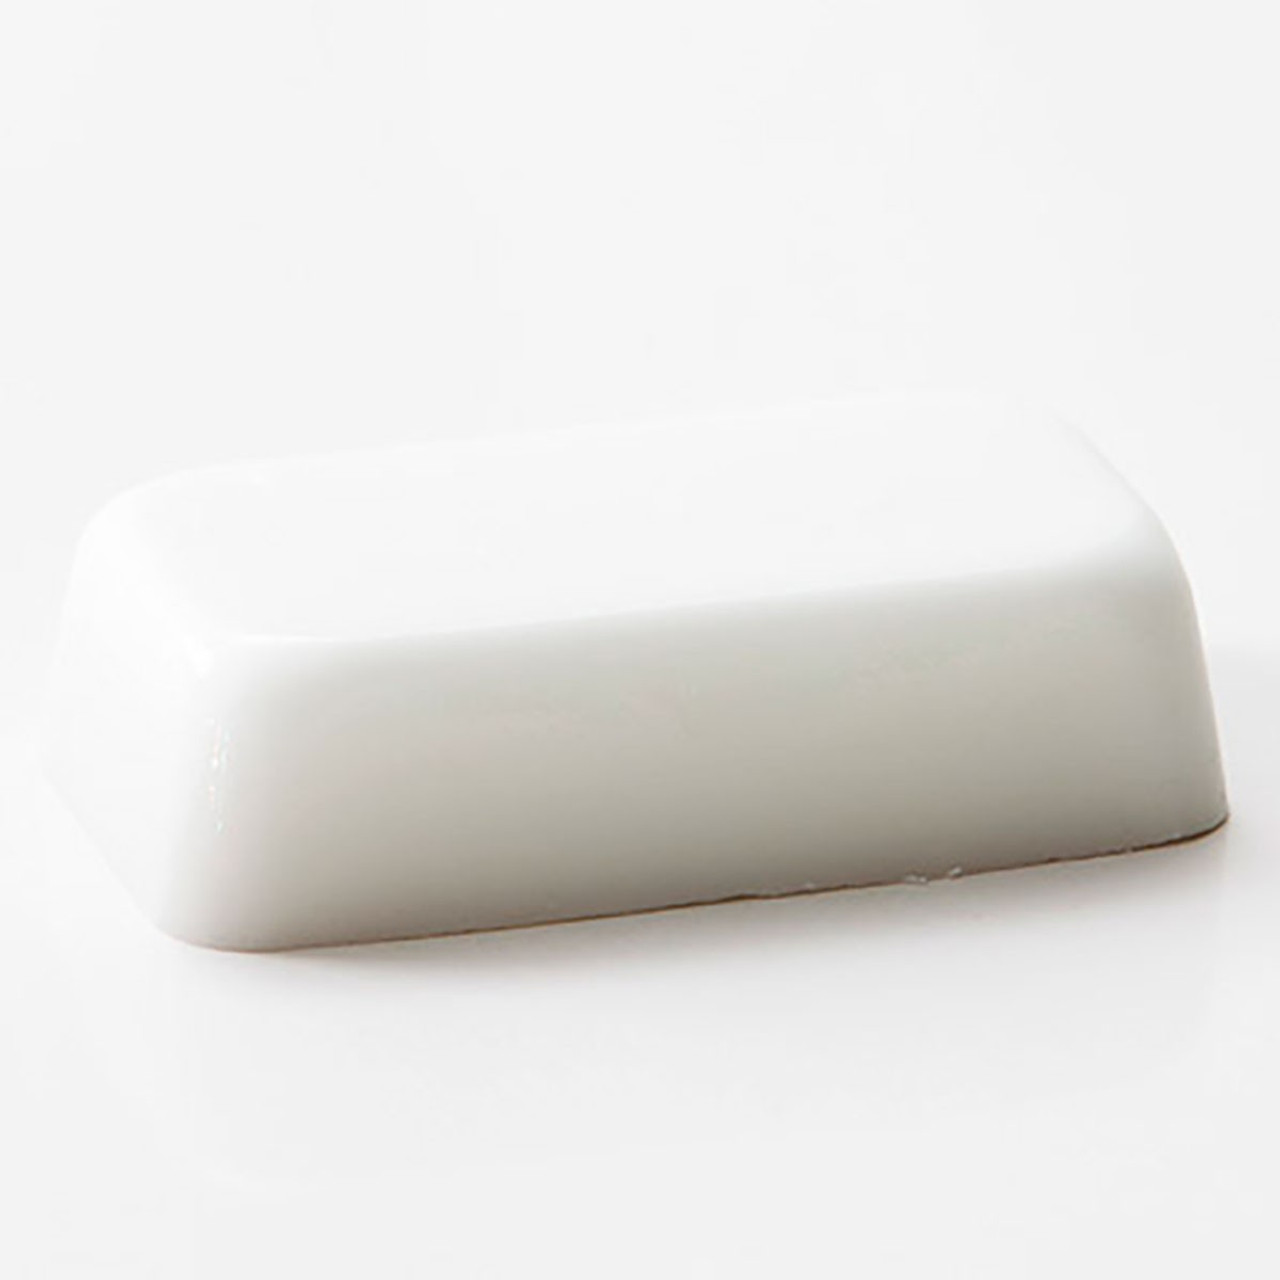 Premium Three Butter Plus MP Soap Base - 2 lb Tray - Wholesale